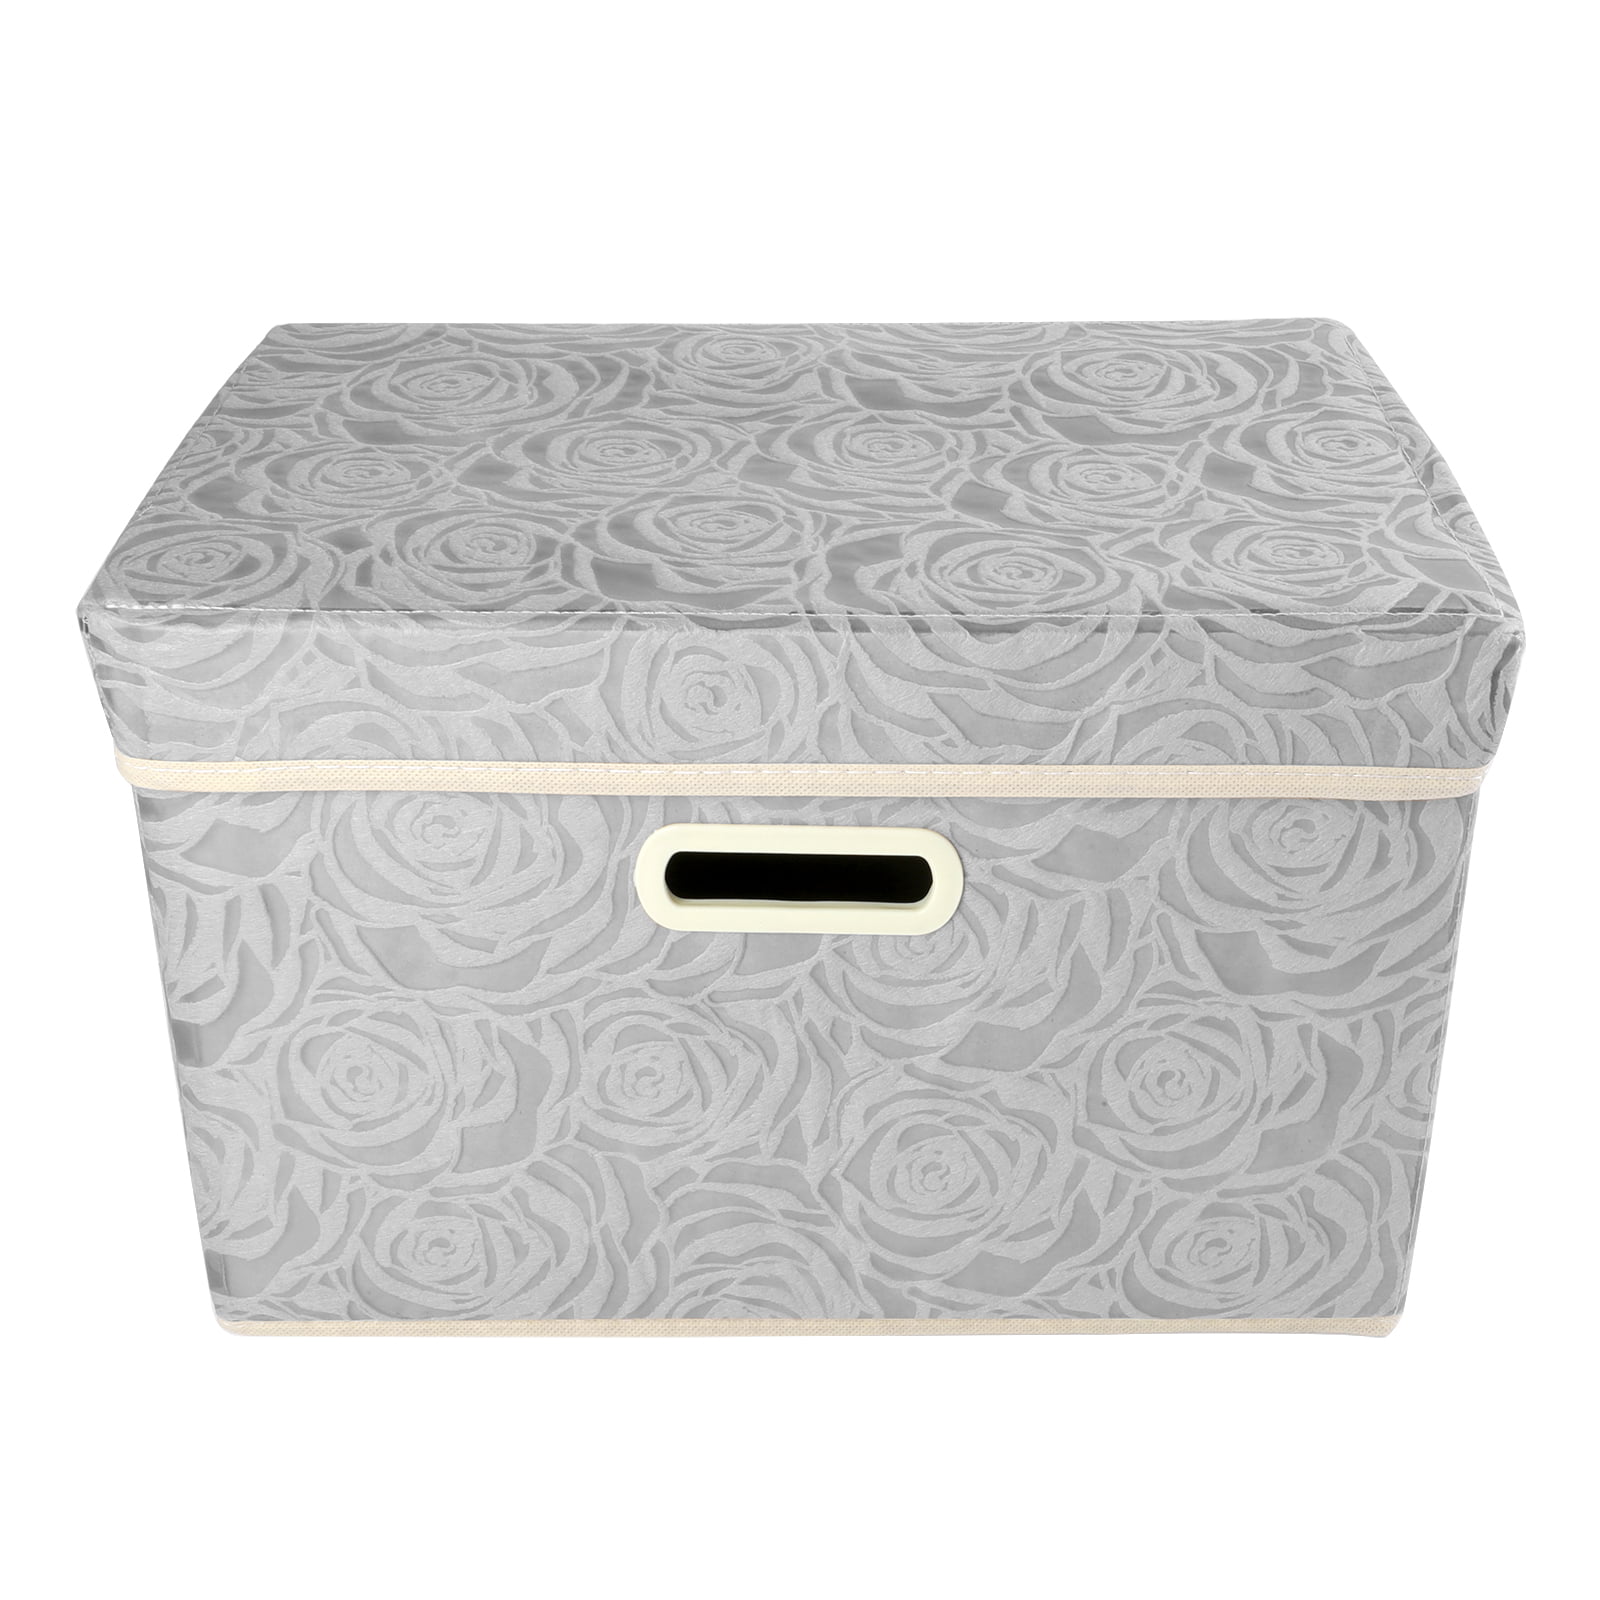 Waterproof Home Storage Bins Organizer Boxes Basket Drawer Container 